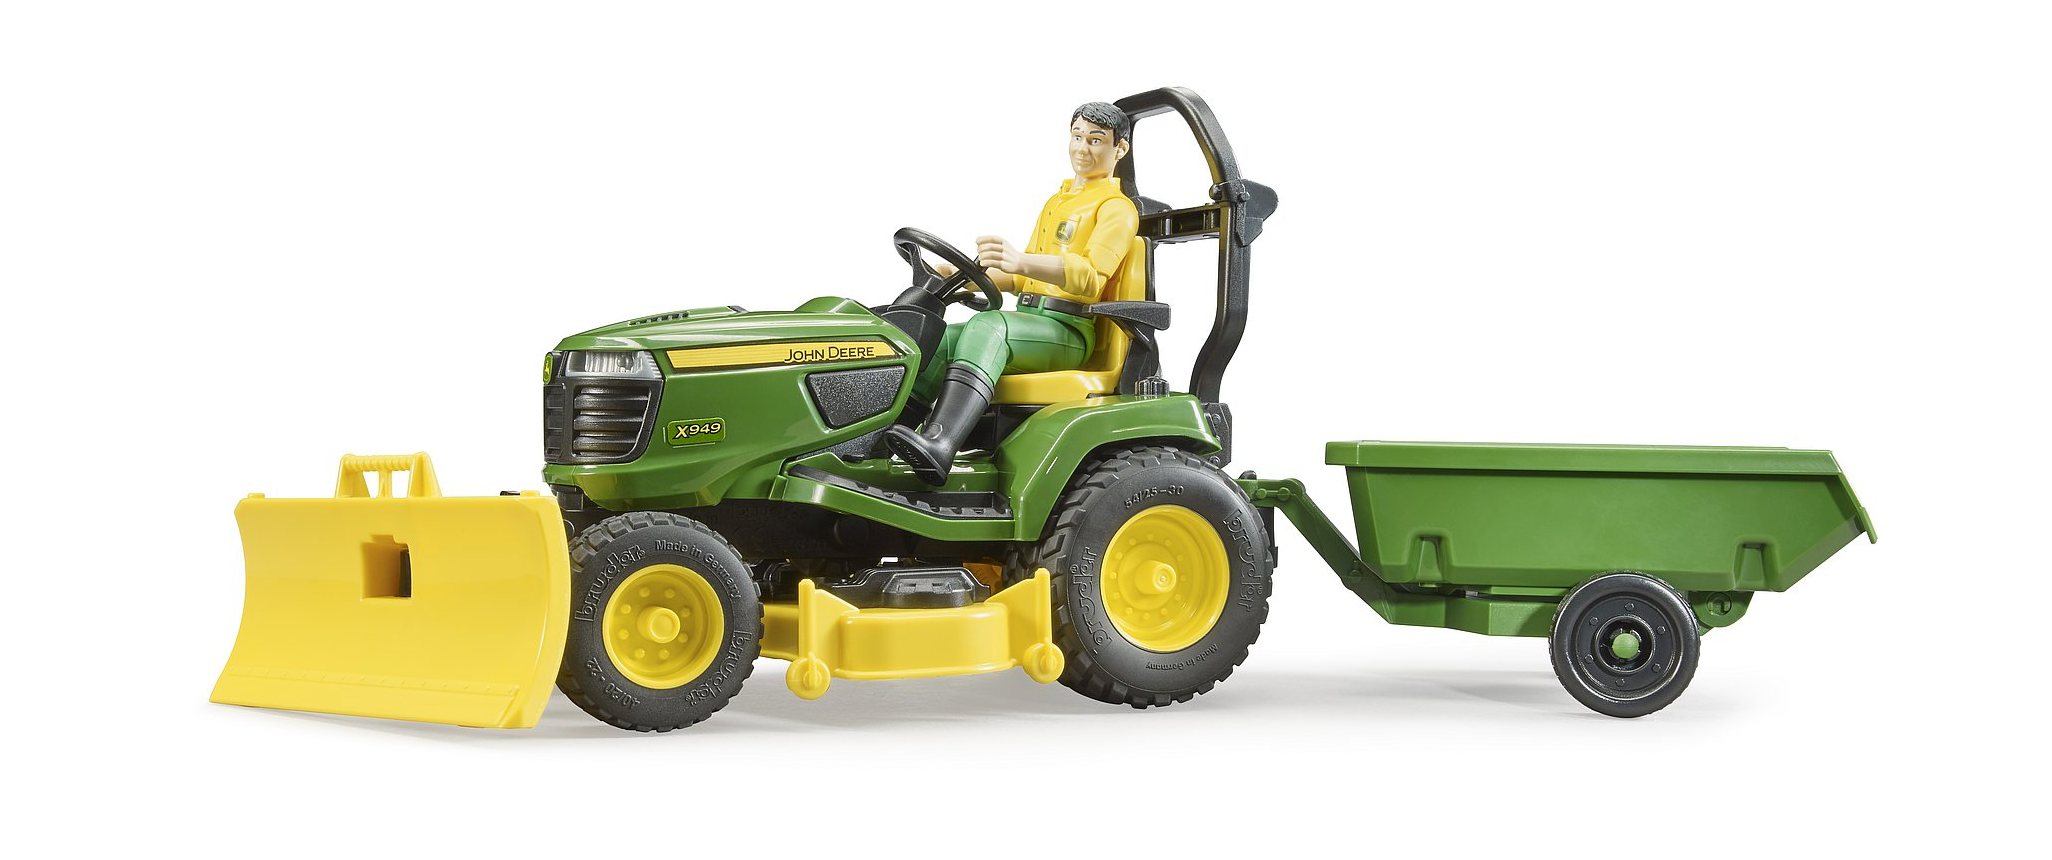 John Deere Lawn Tractor w Trailer and Figure